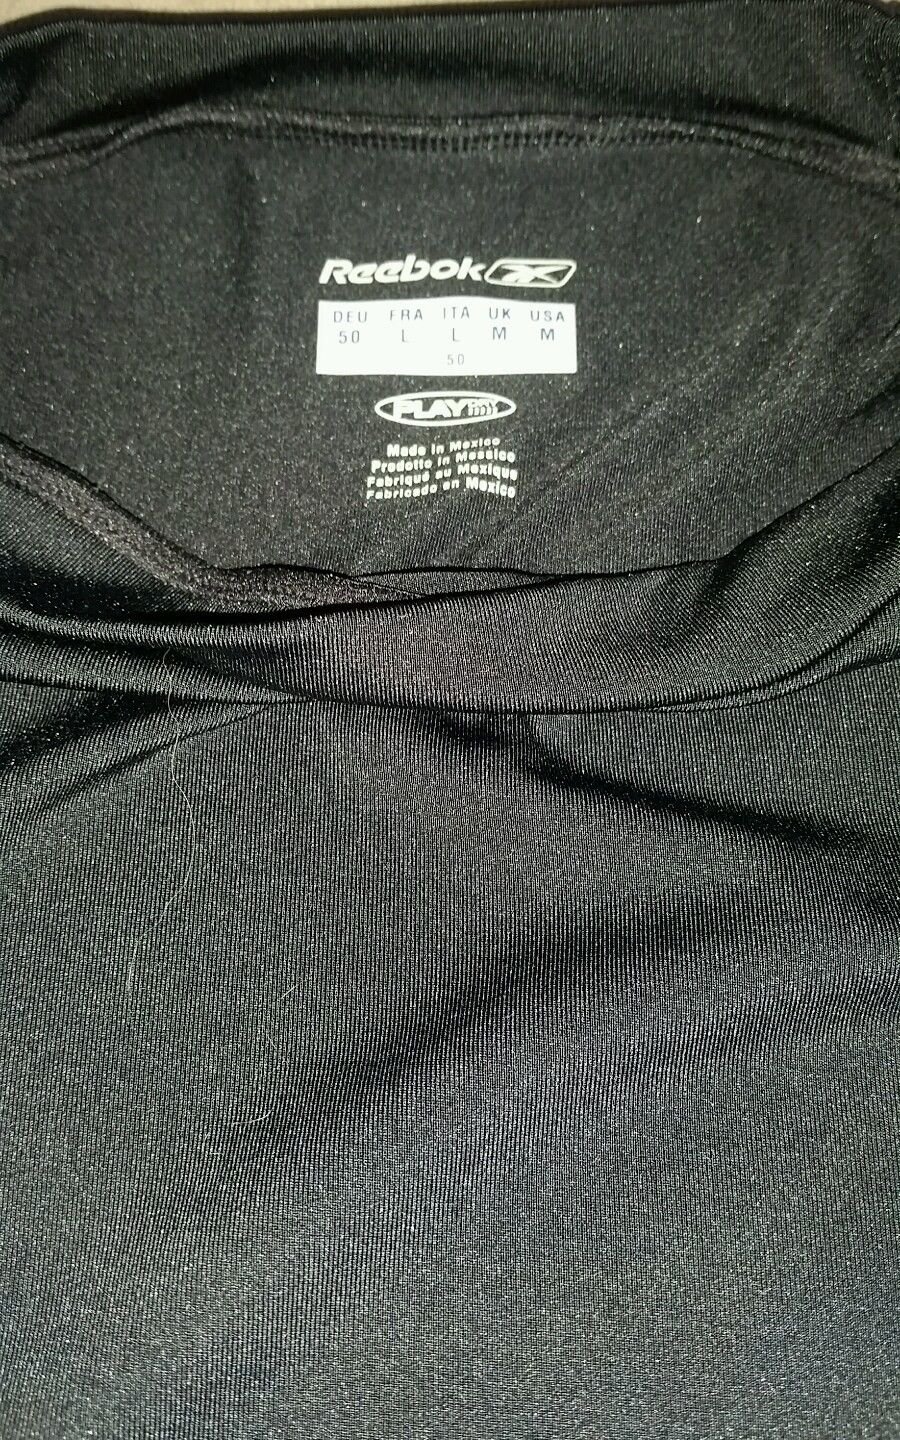 Reebok Play Dry Black Small T-Shirt Crewneck Mens